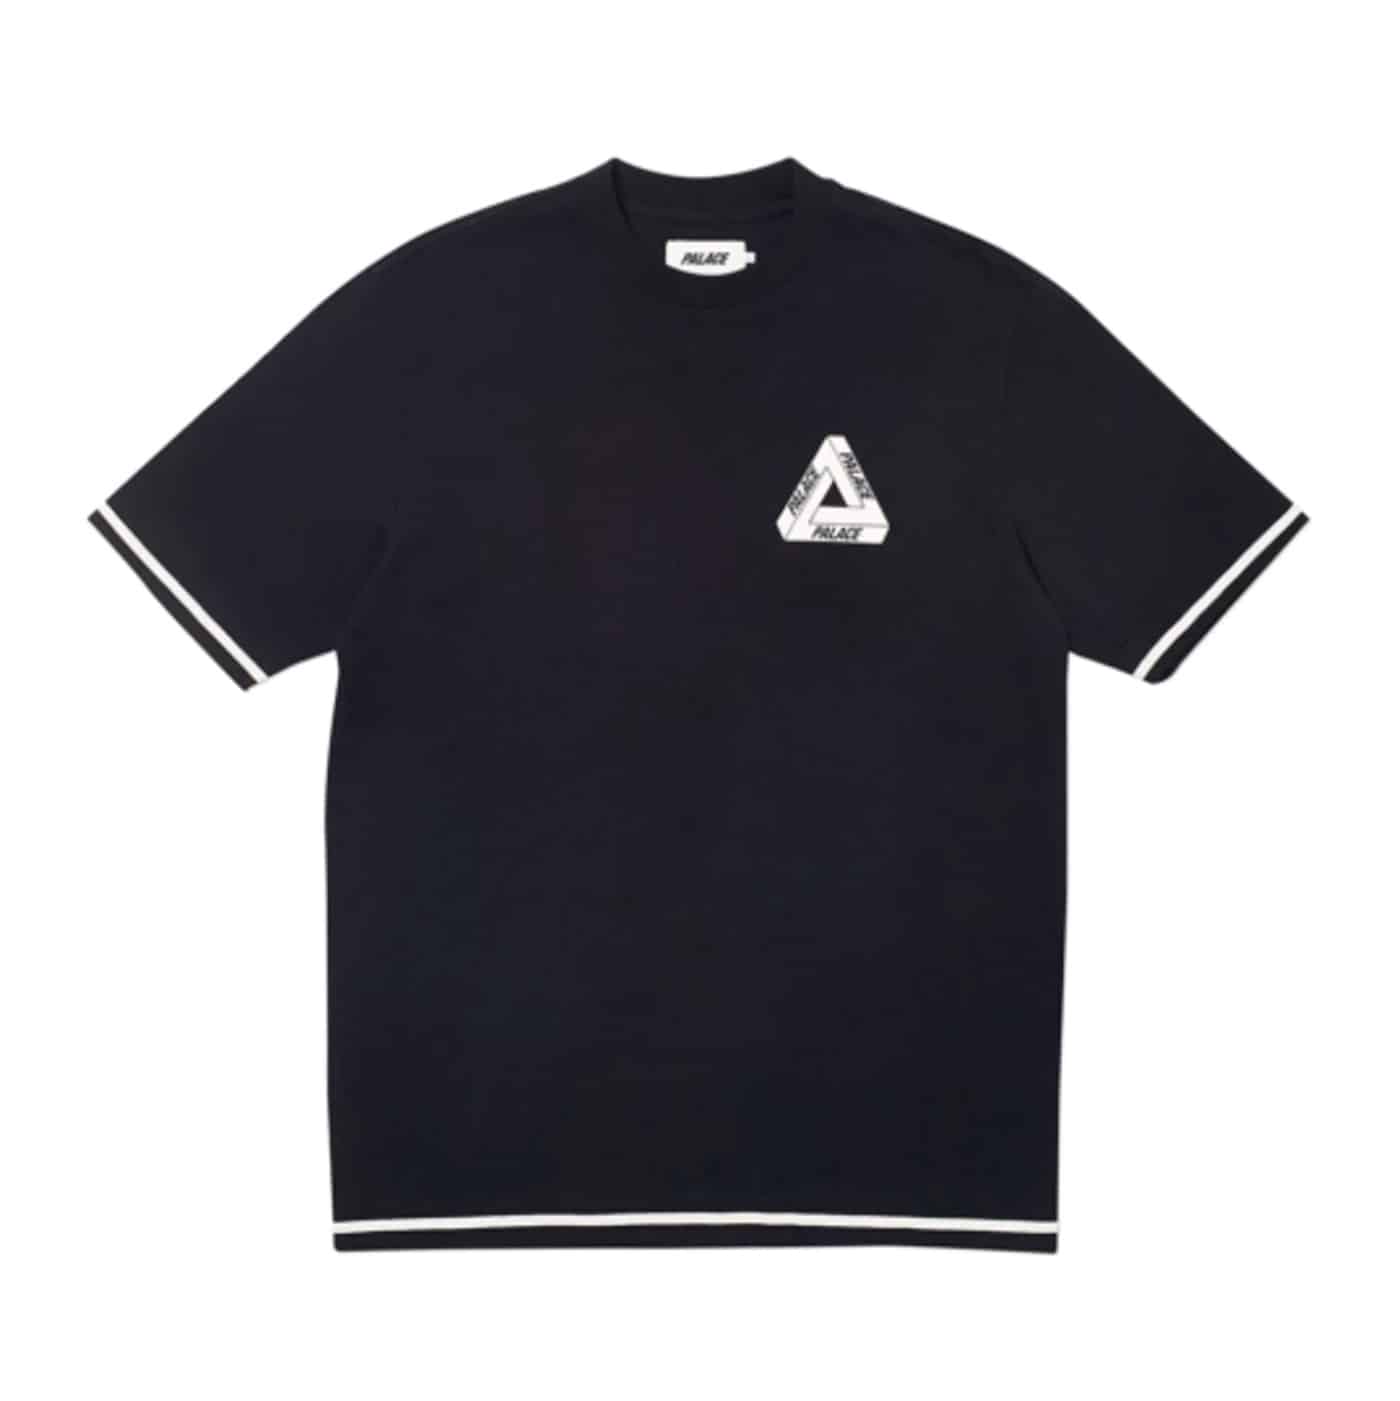 Palace CH T-shirt Black